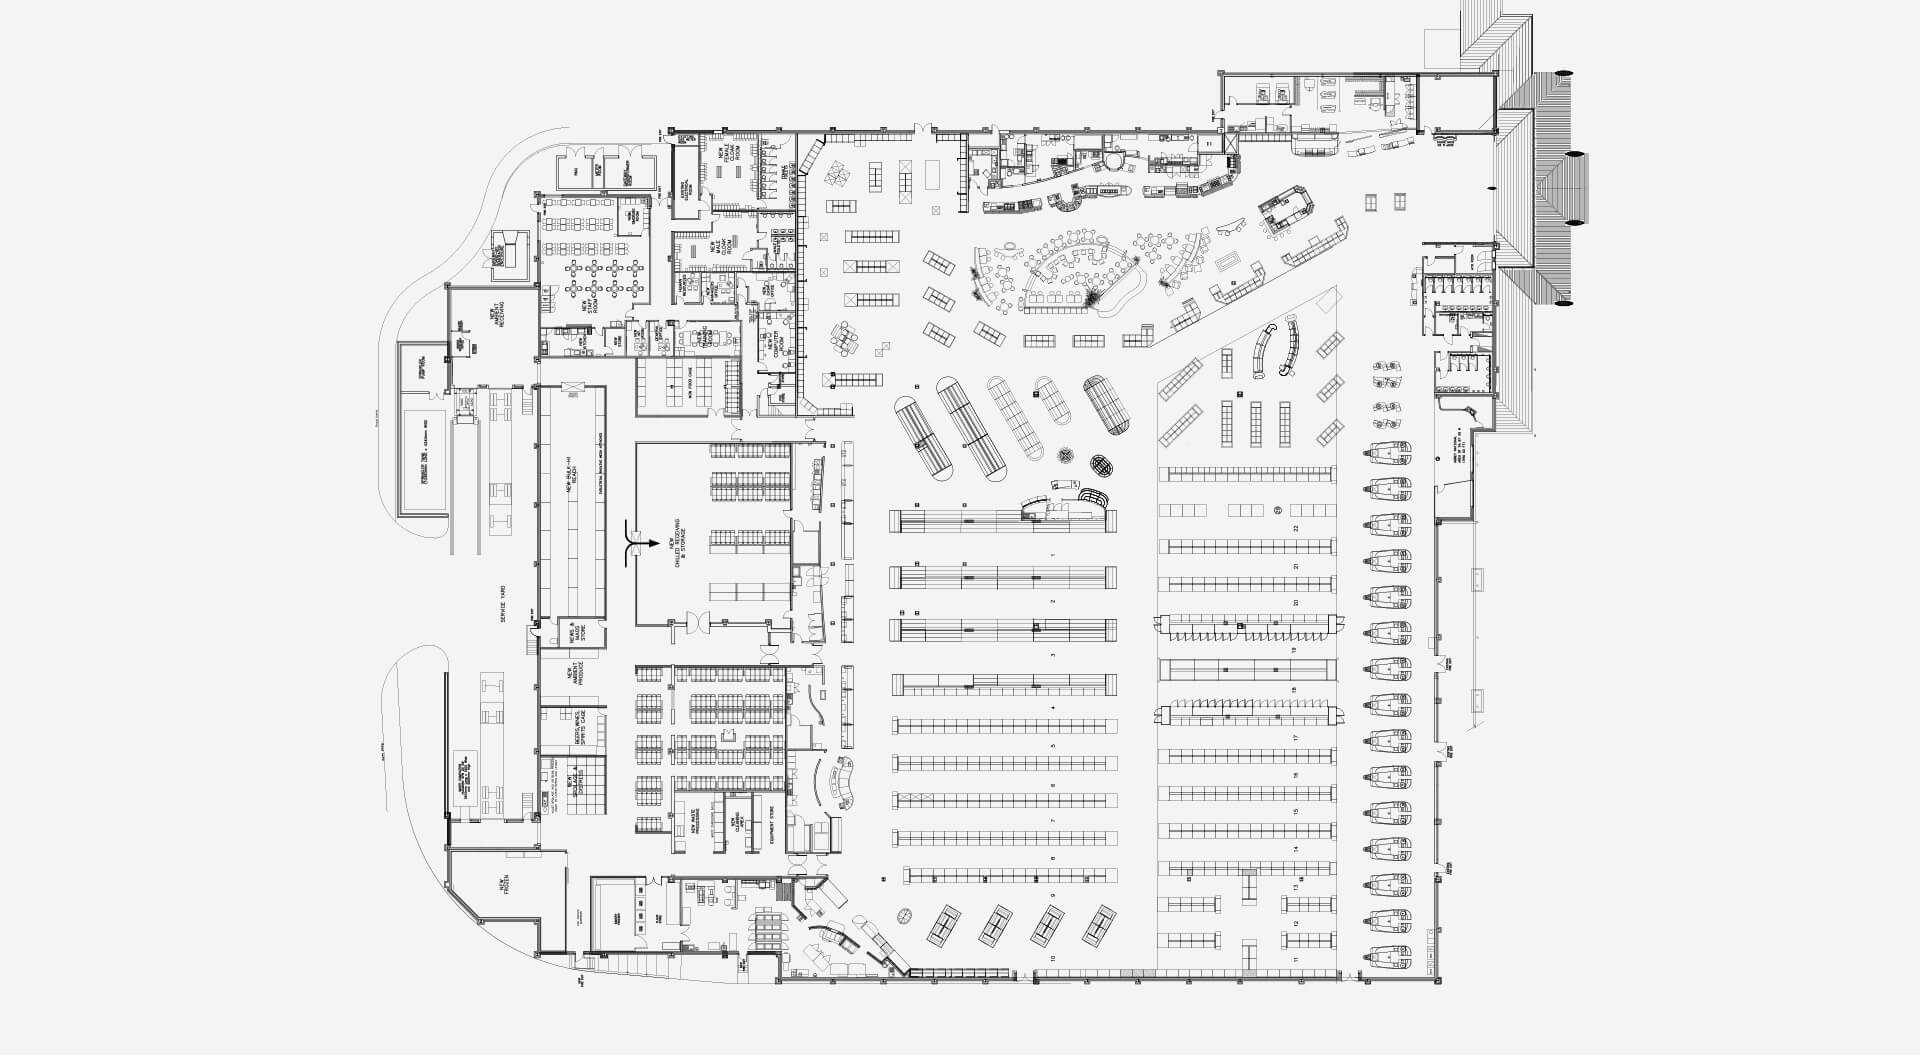 Safeway Mega store hypermarket floor plan layout and design